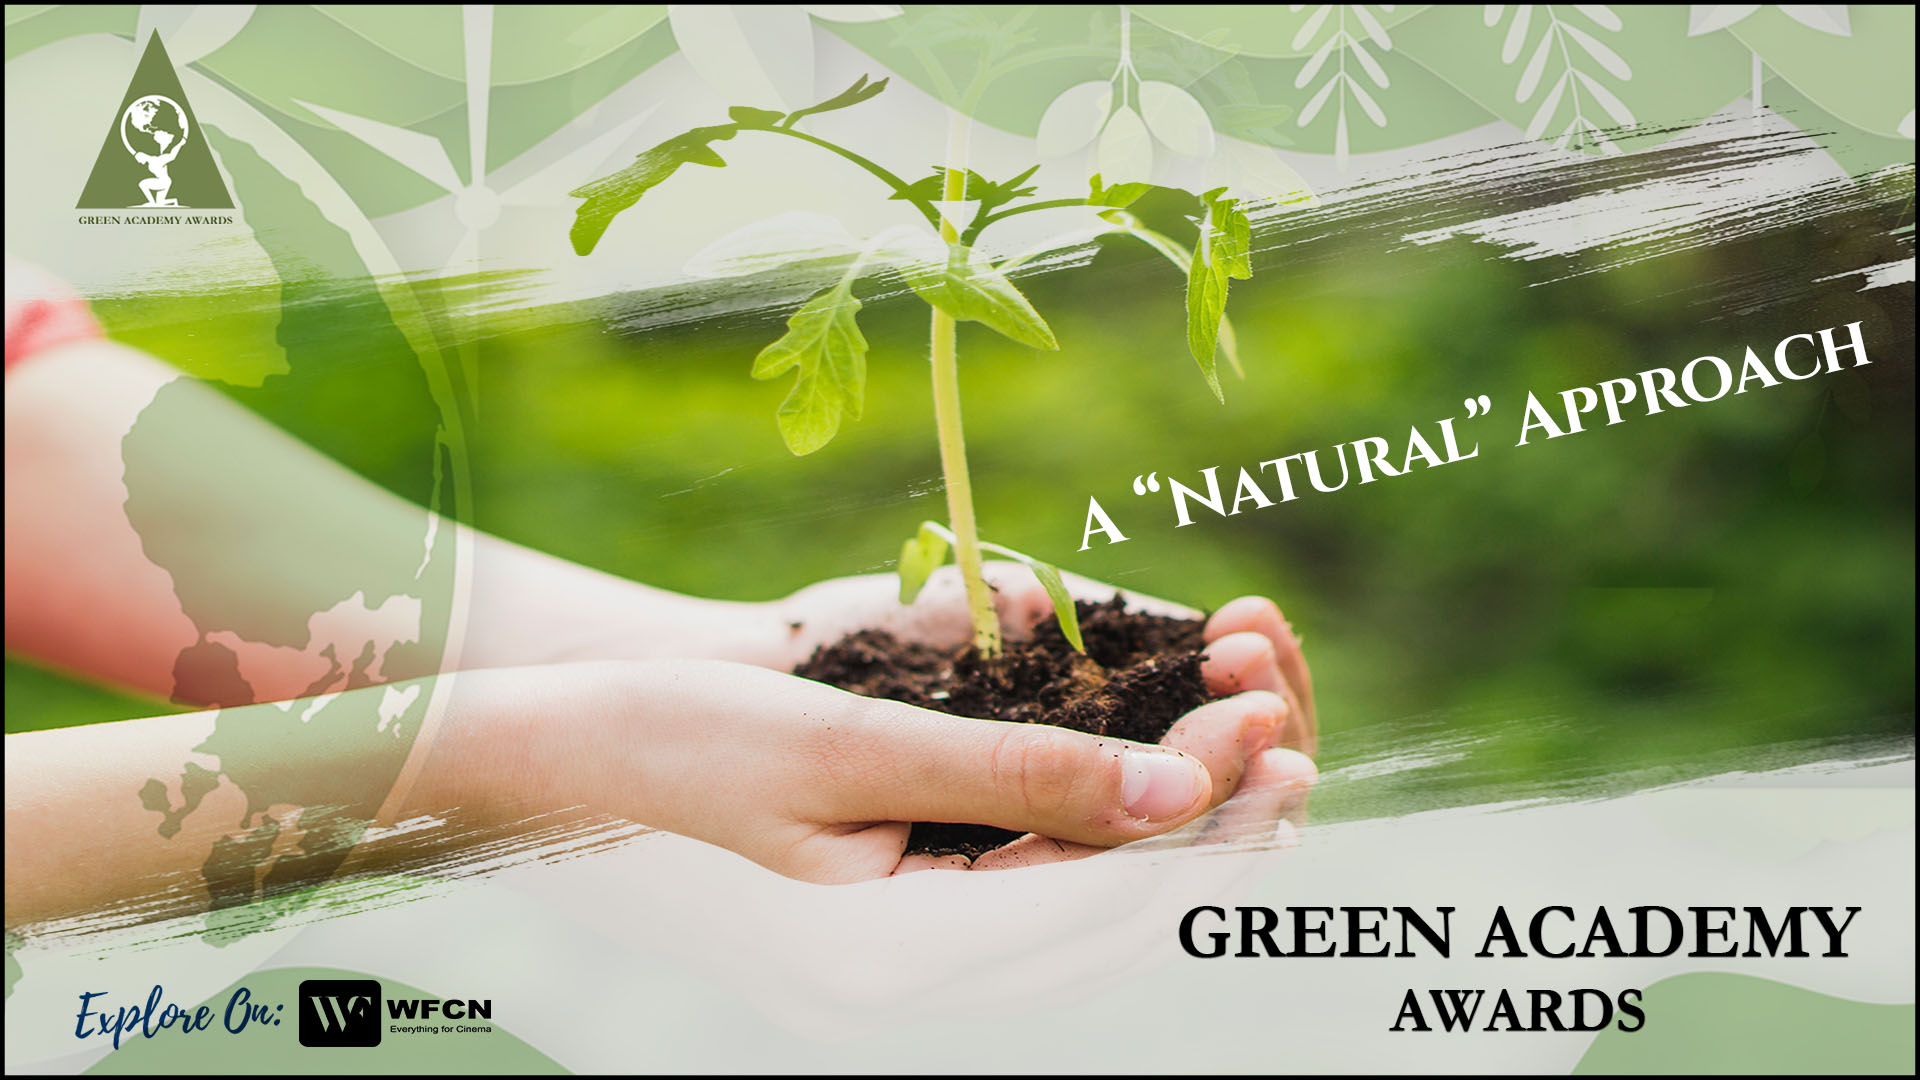 GREEN ACADEMY AWARDS: A “Natural” Approach